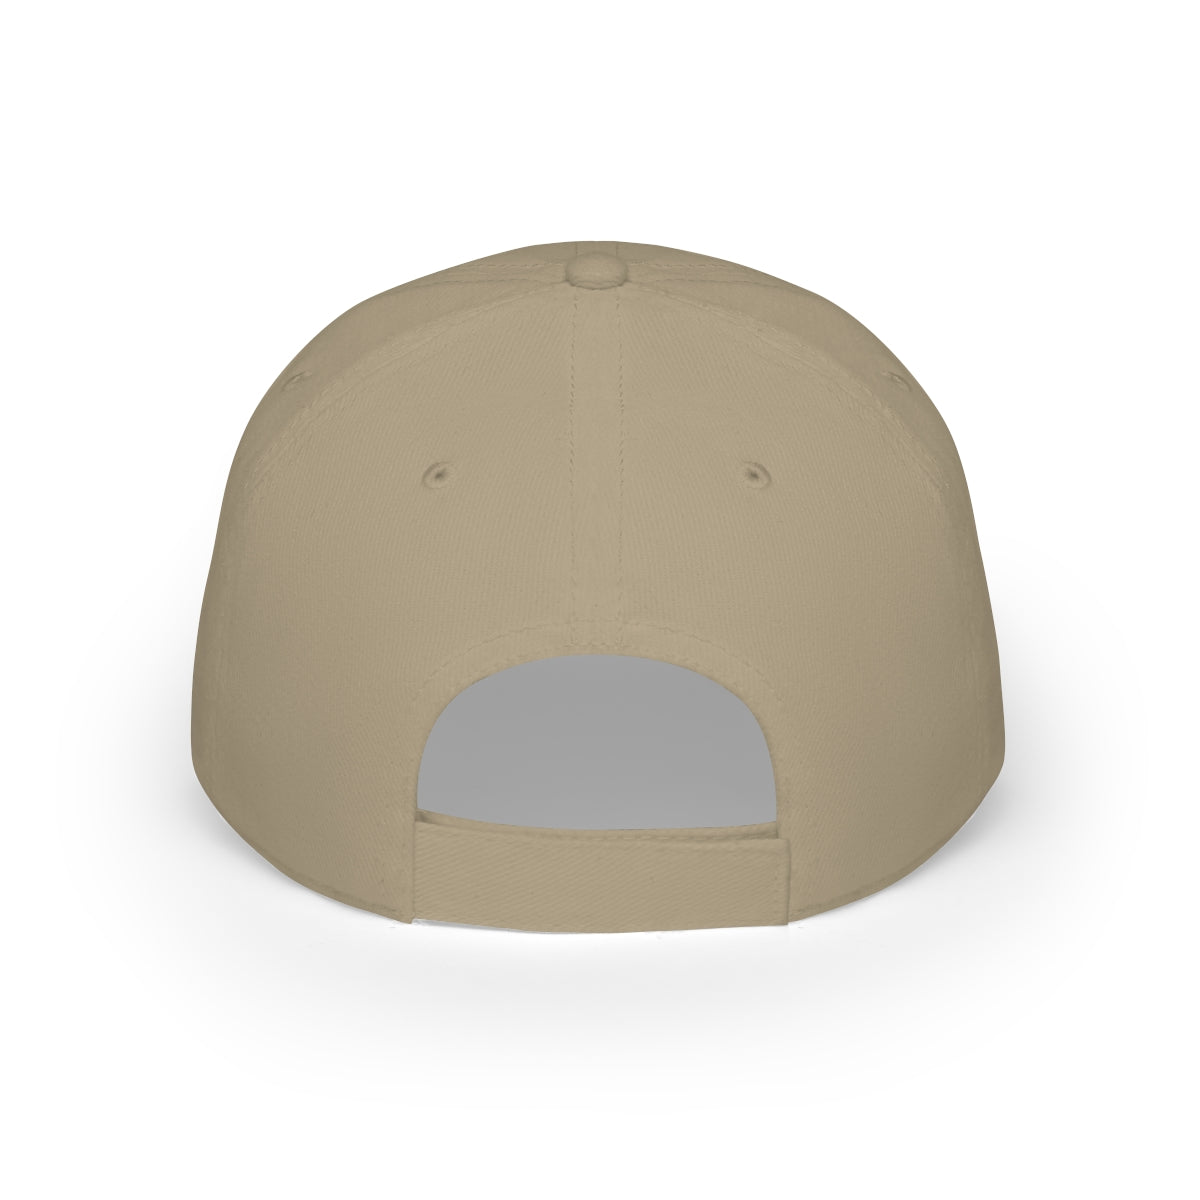 CWTC - Low Profile Baseball Cap (White or Khaki Available)